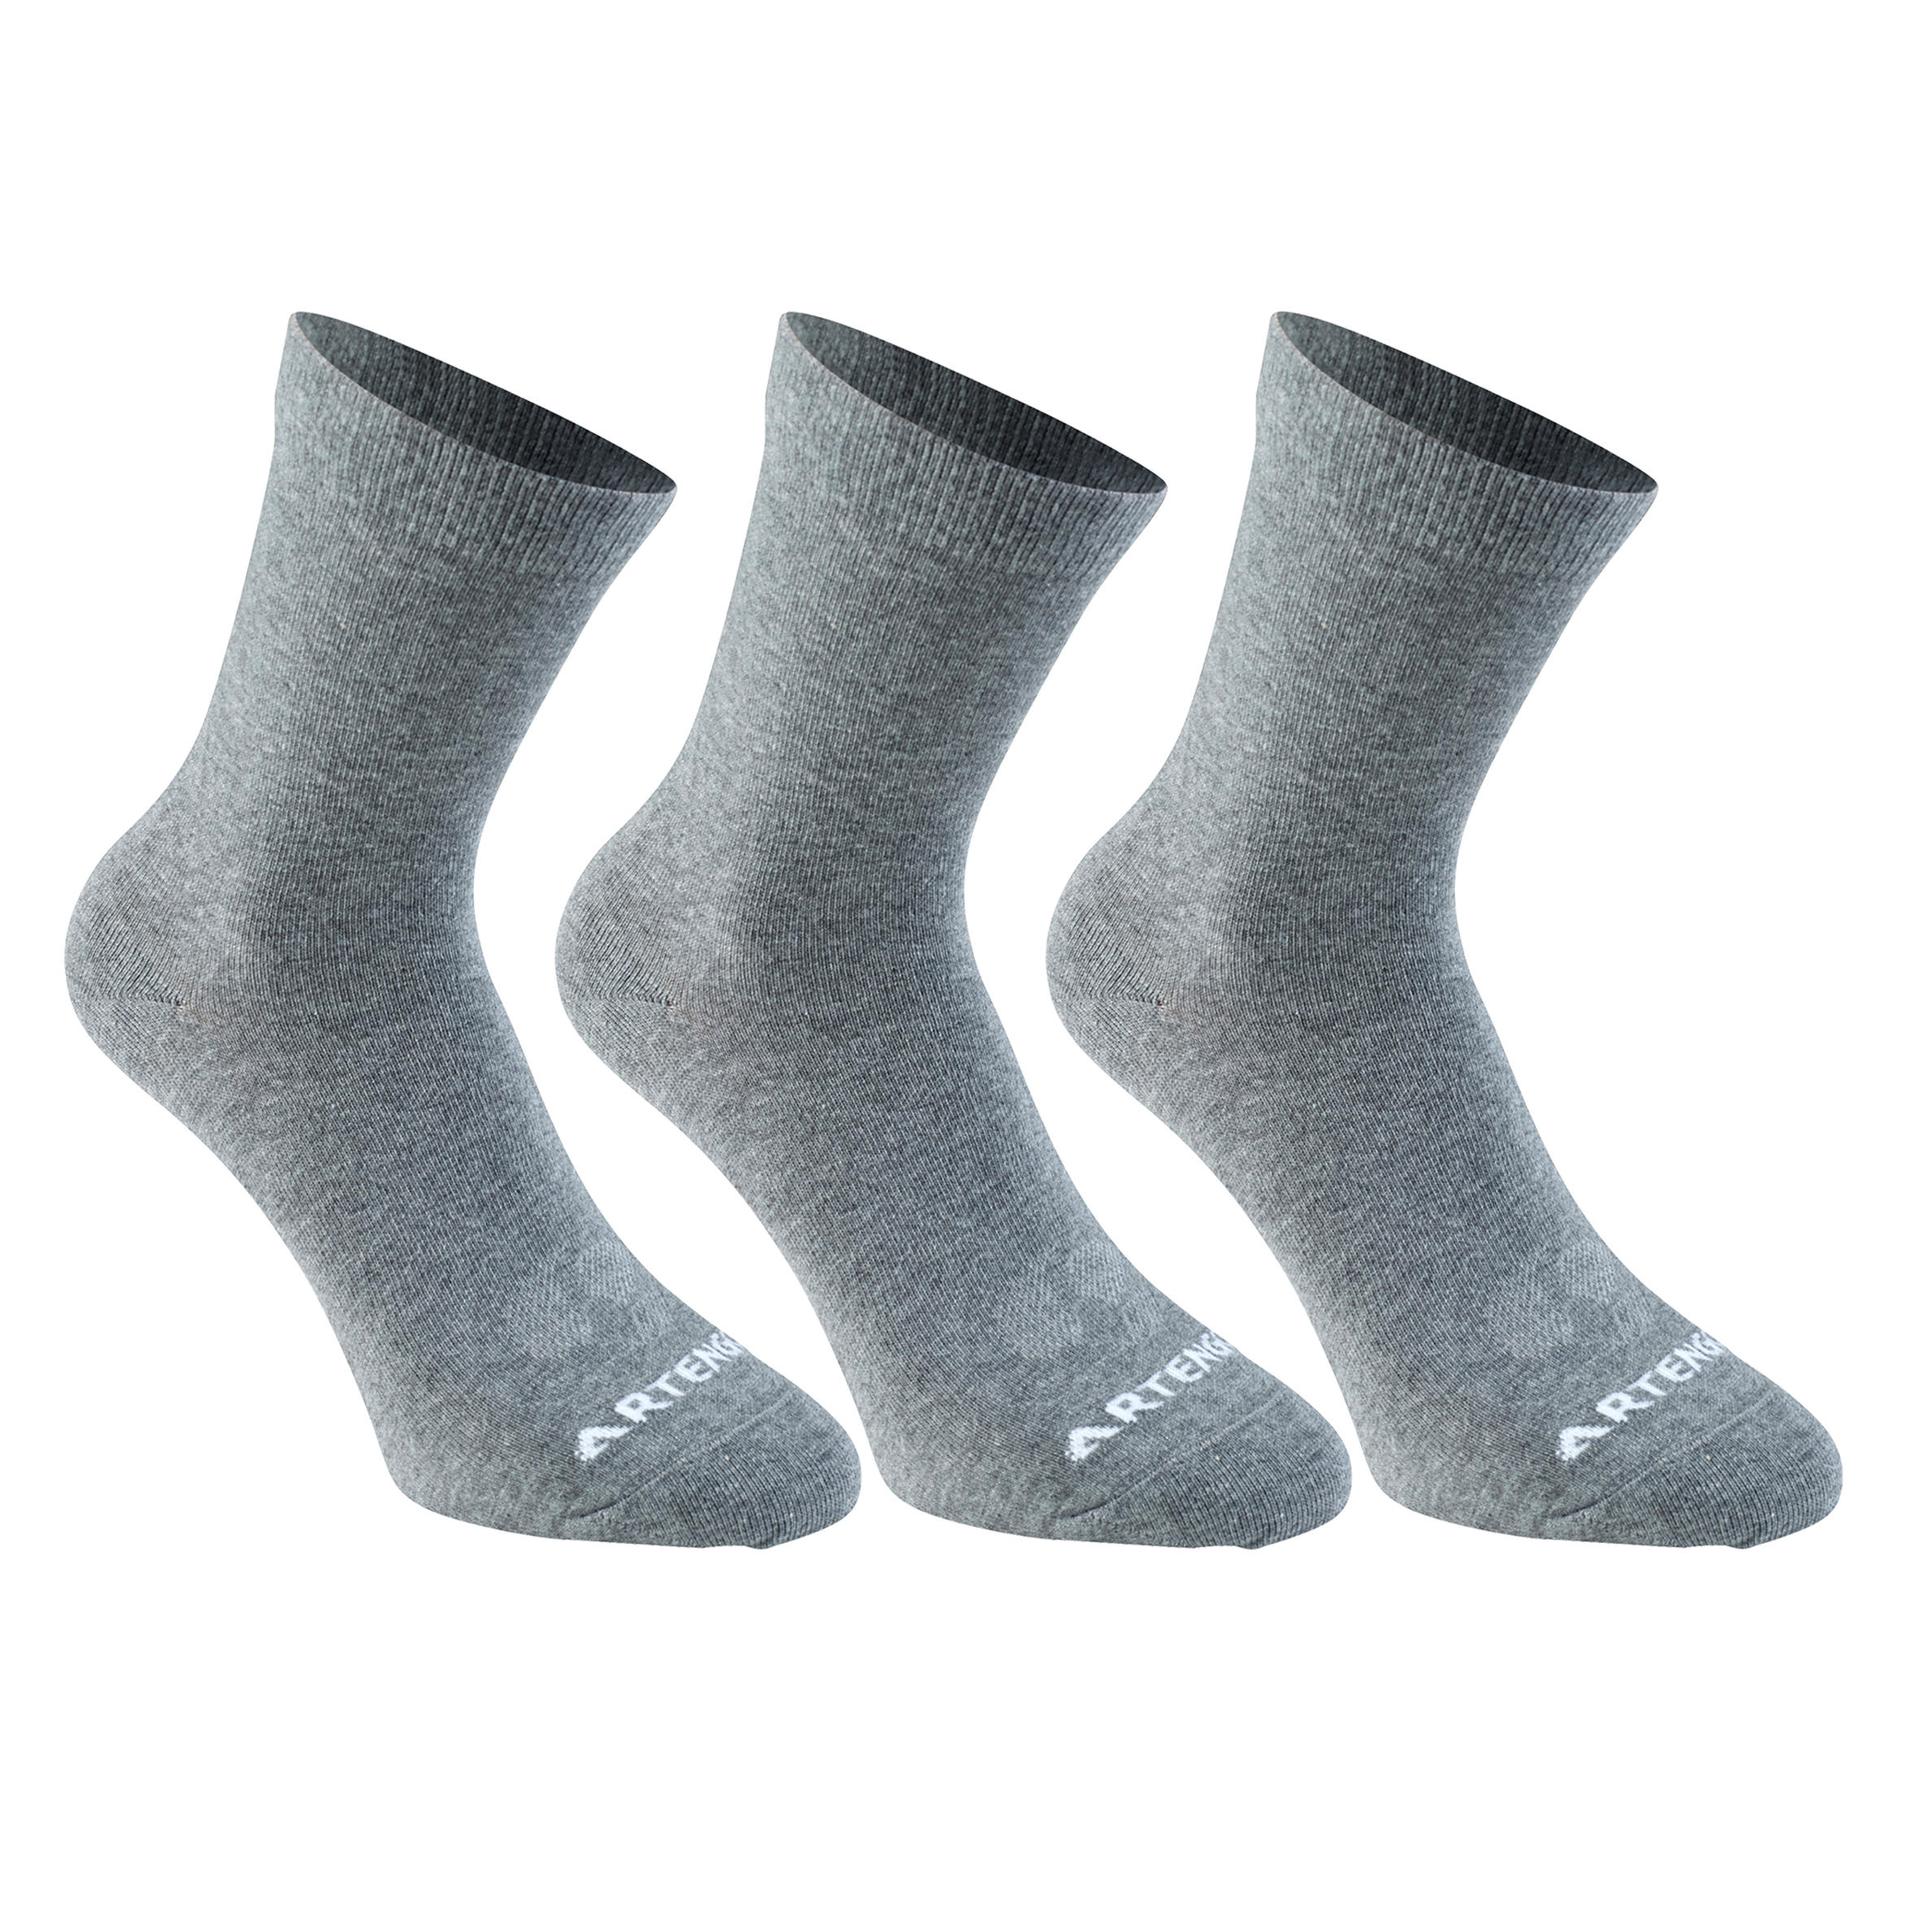 socks grey - adult high tri pack